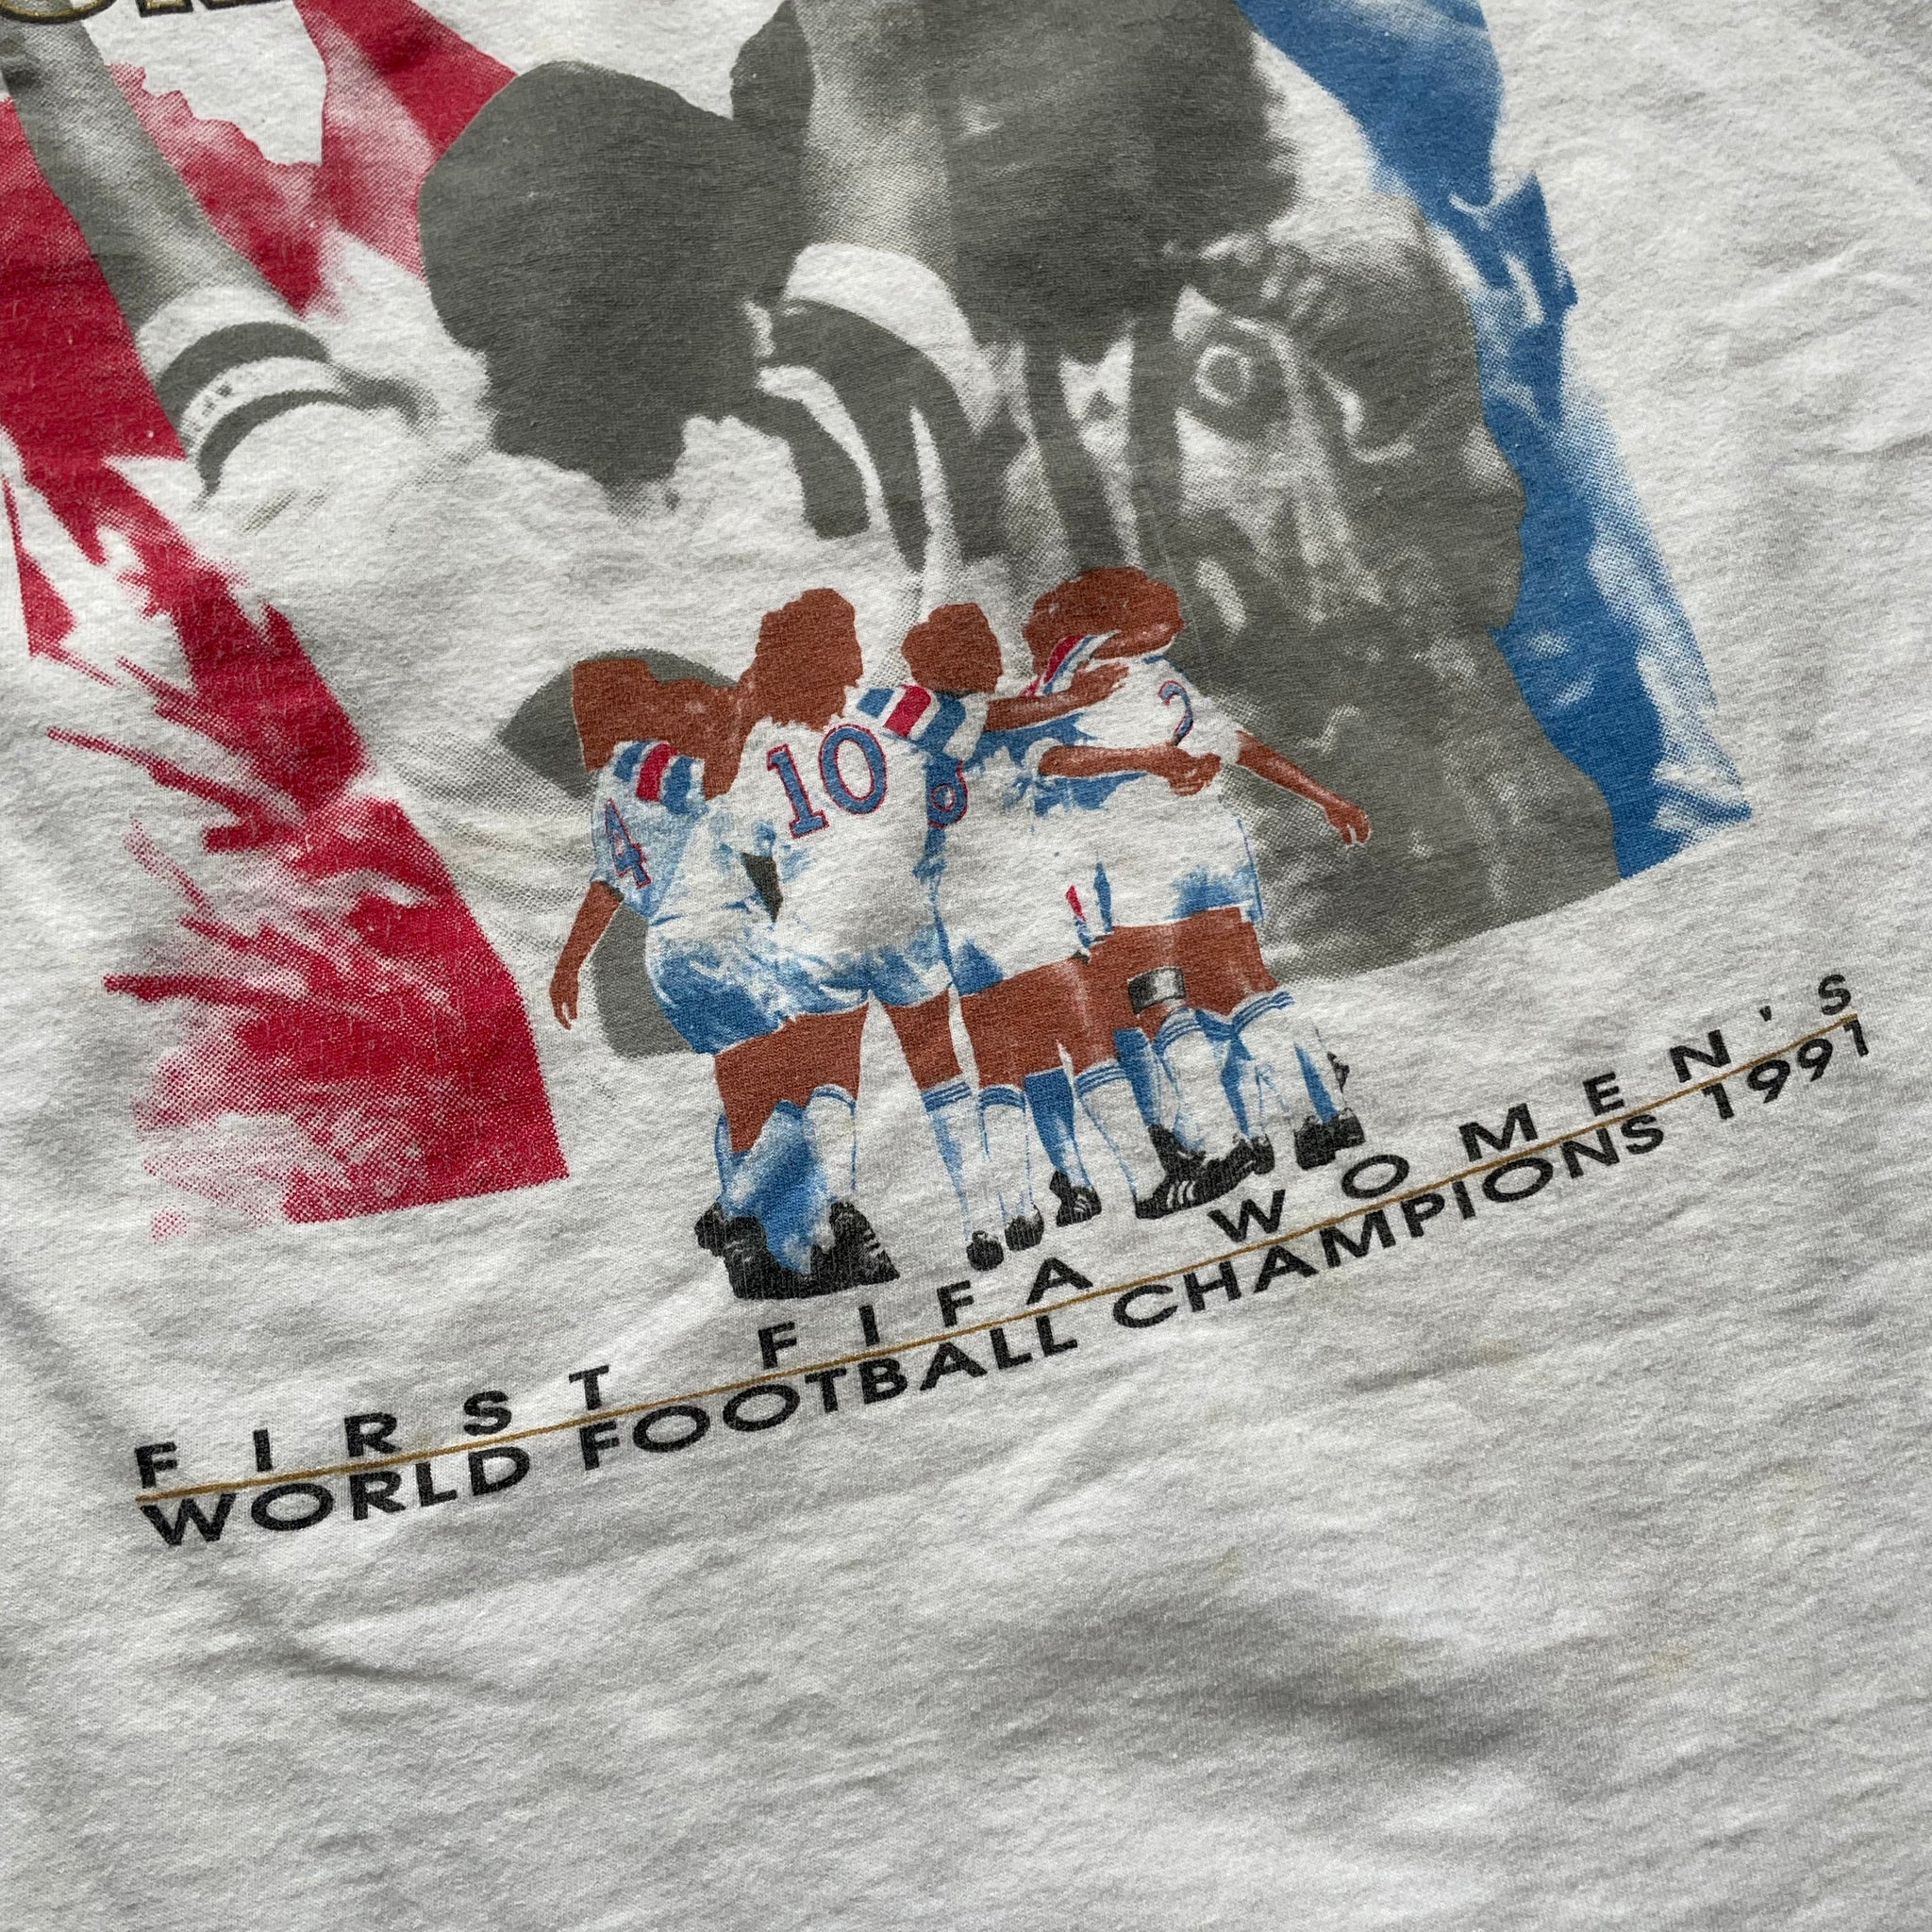 Adidas 1991 FIFA World Cup Champions T-Shirt - XL